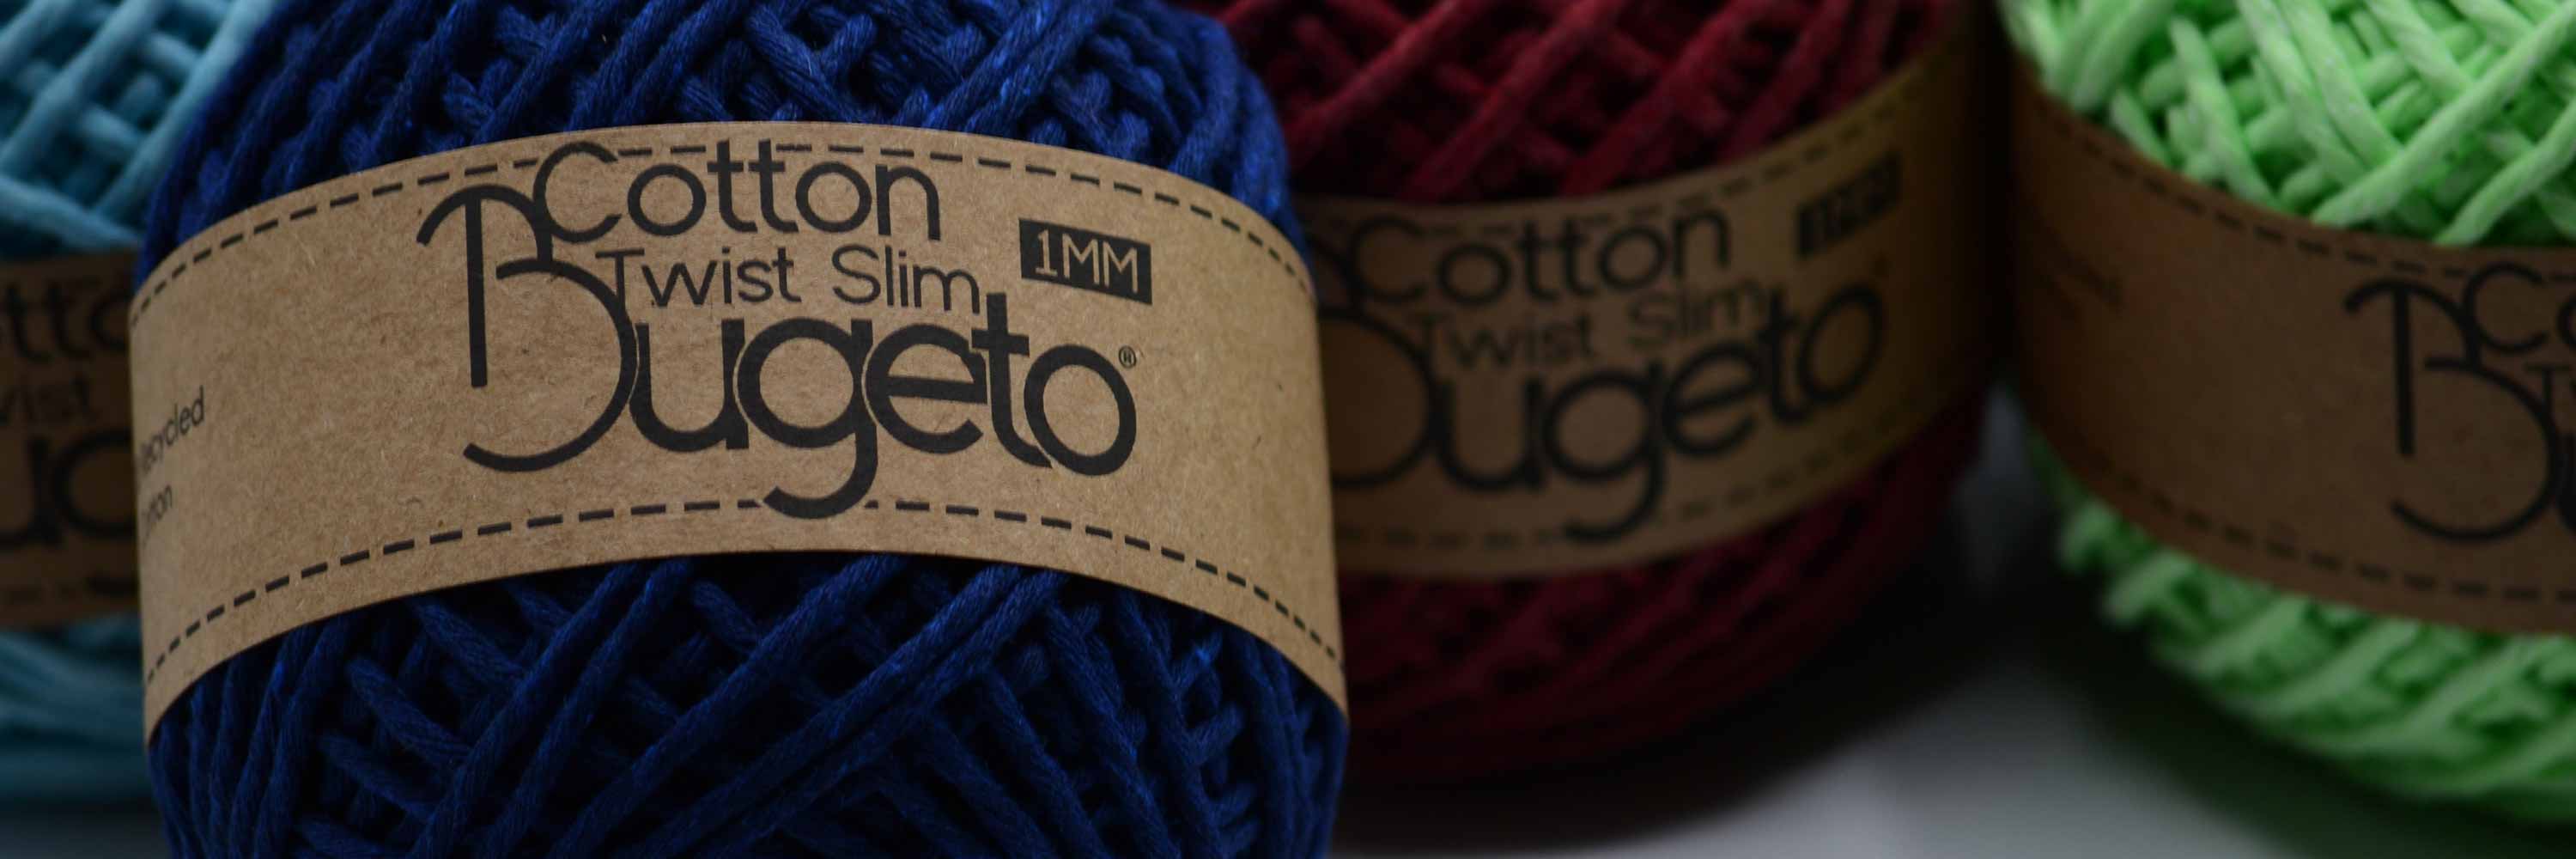 cotton premium yarns  premium cotton twist yarn bugeto yarn